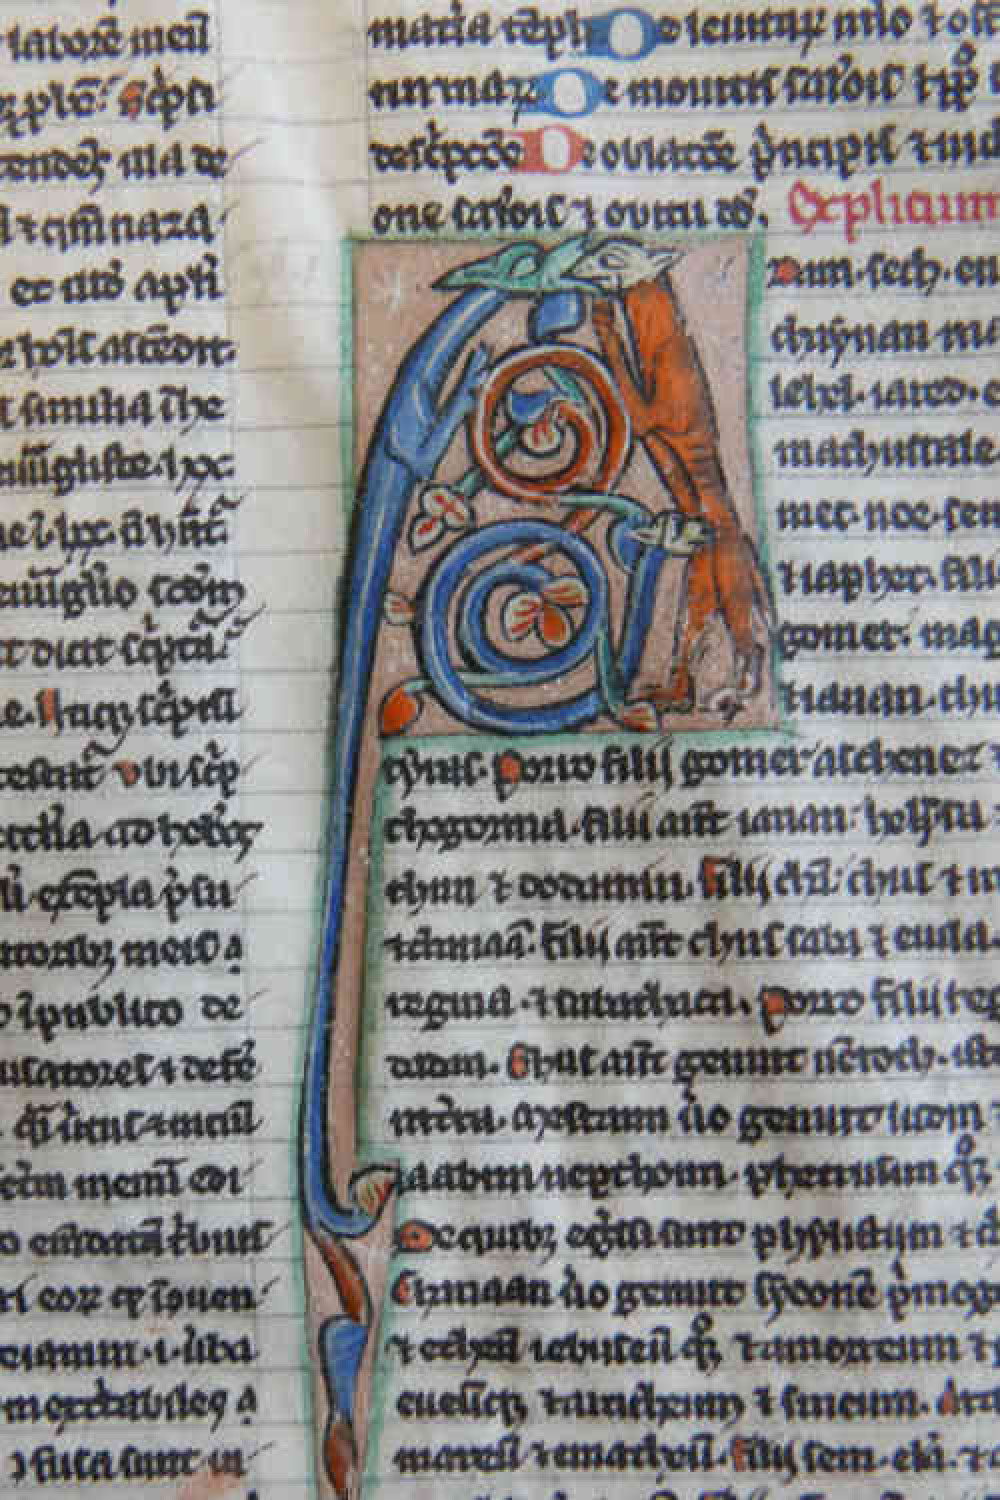 The precious 13th century manuscript leaf